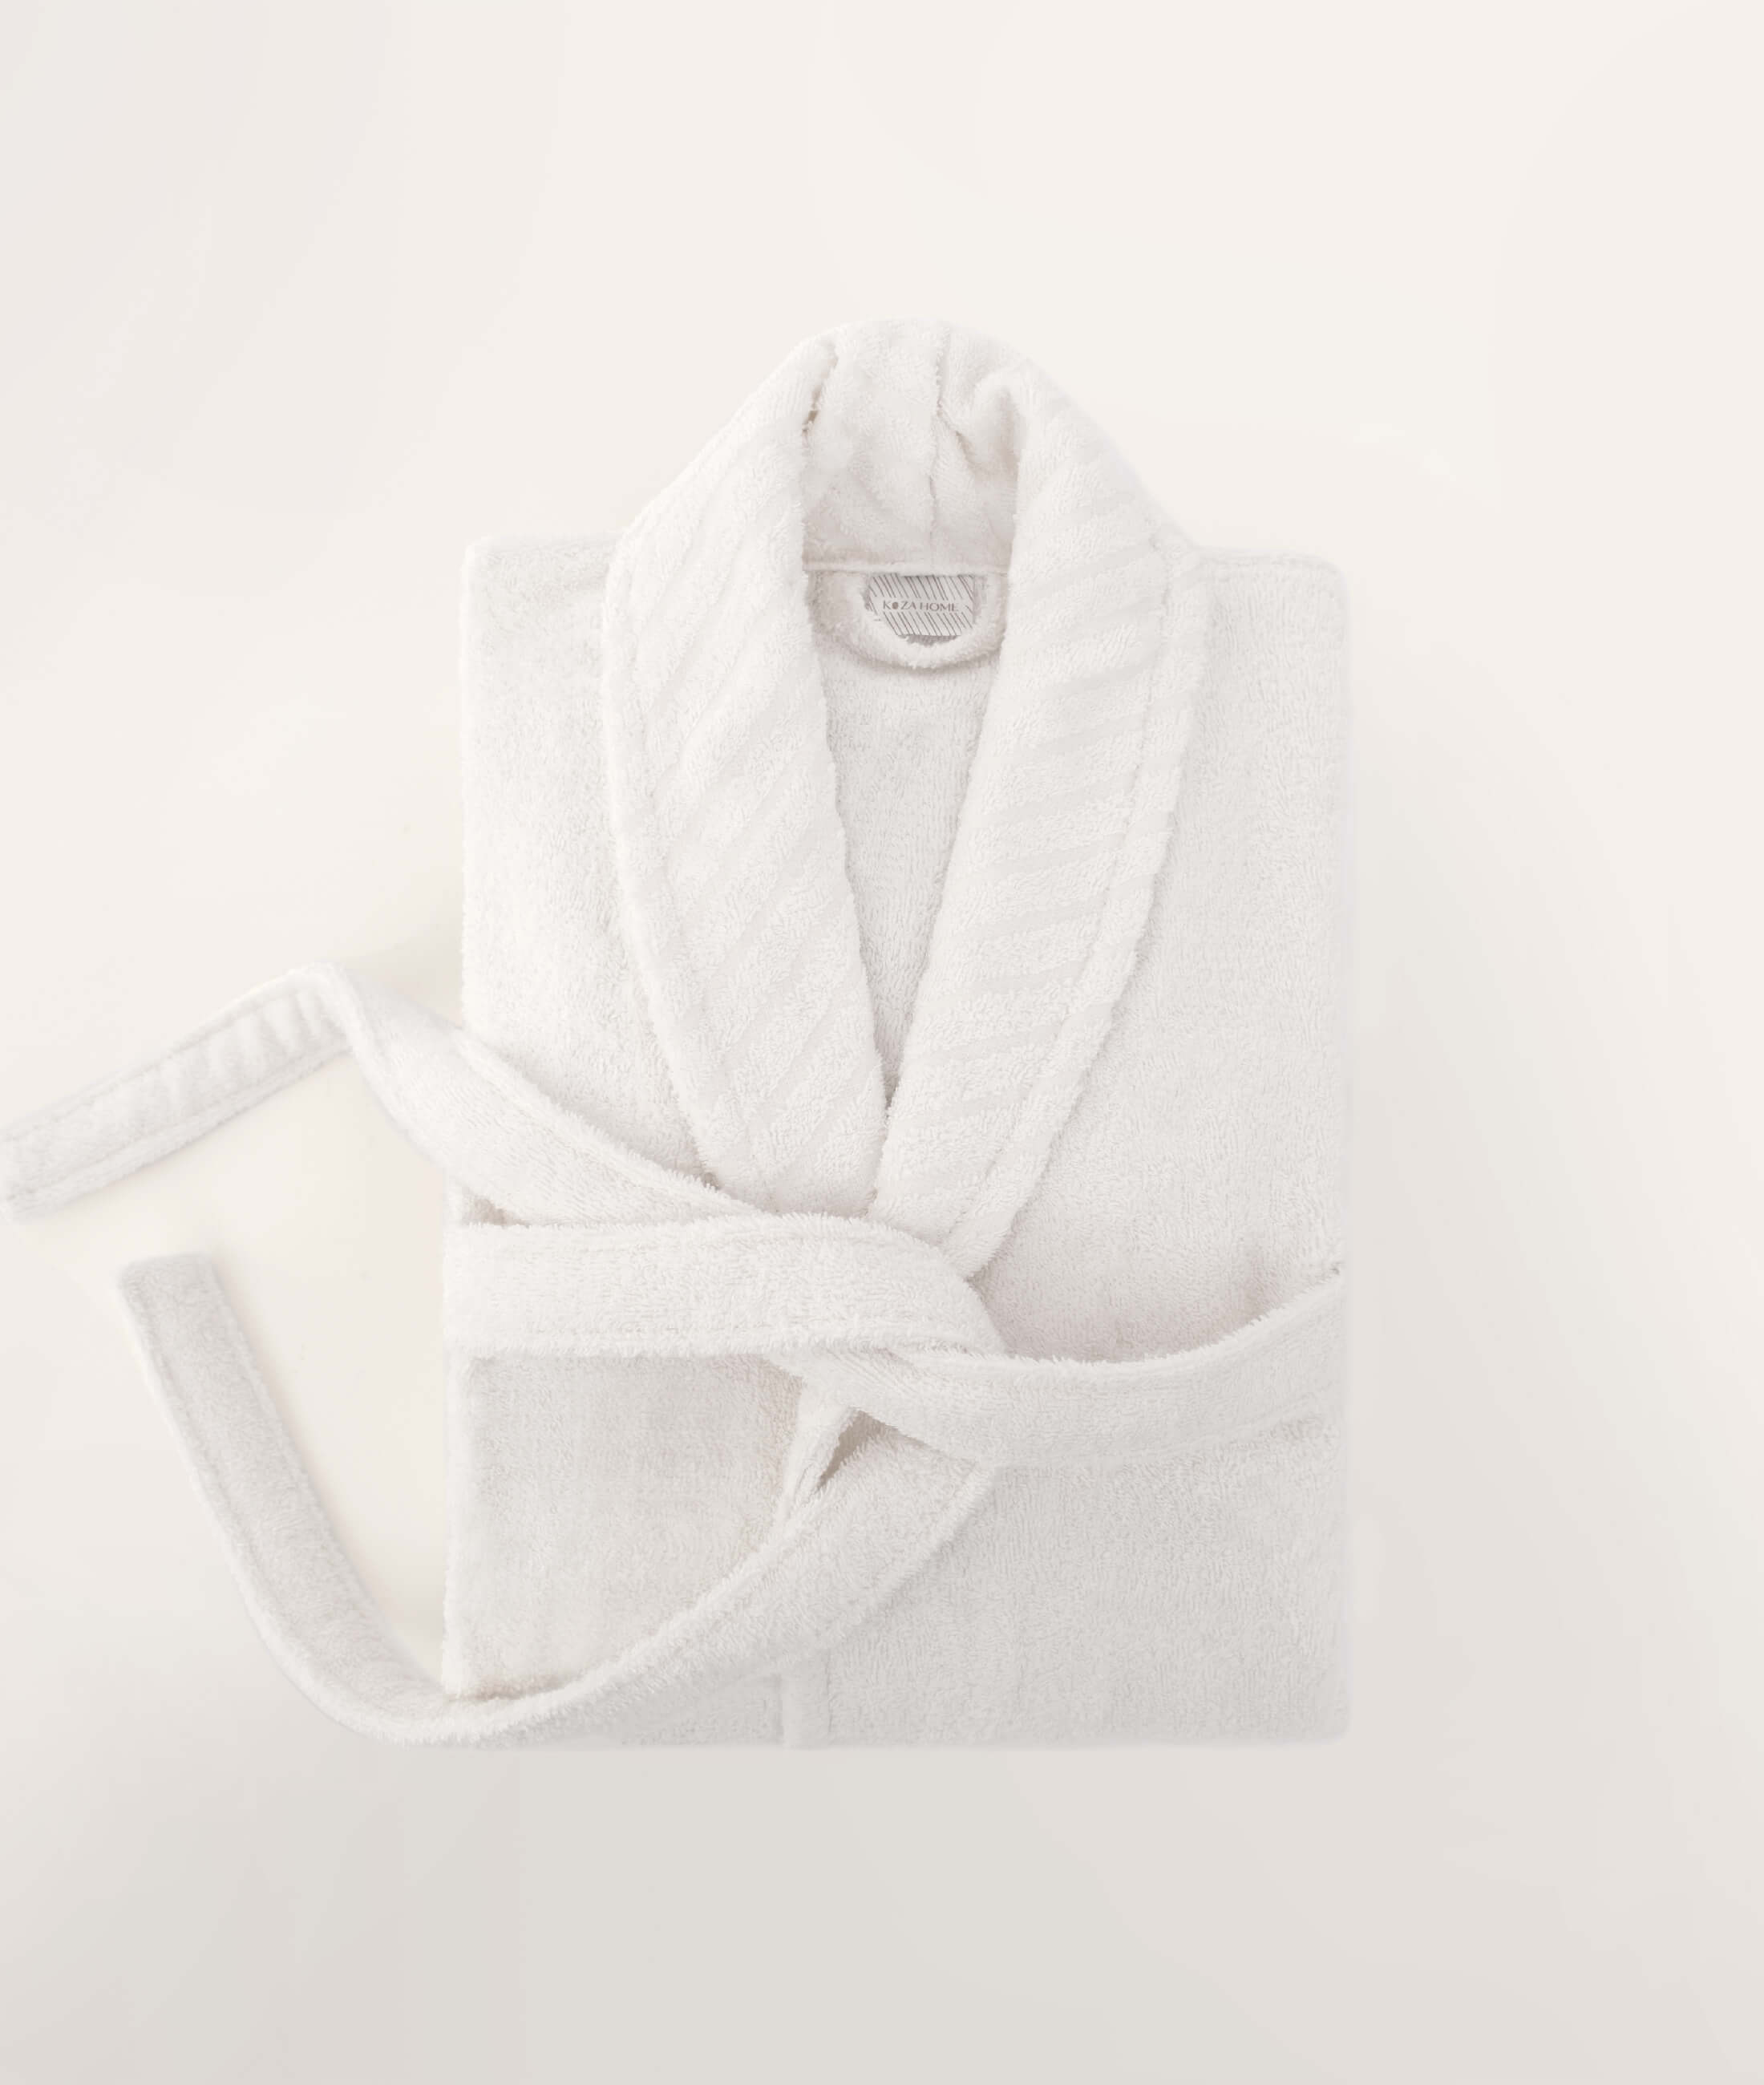 Lykya White Bathrobe Set 2 in 1 Bathrobe 1 Towel 1054A